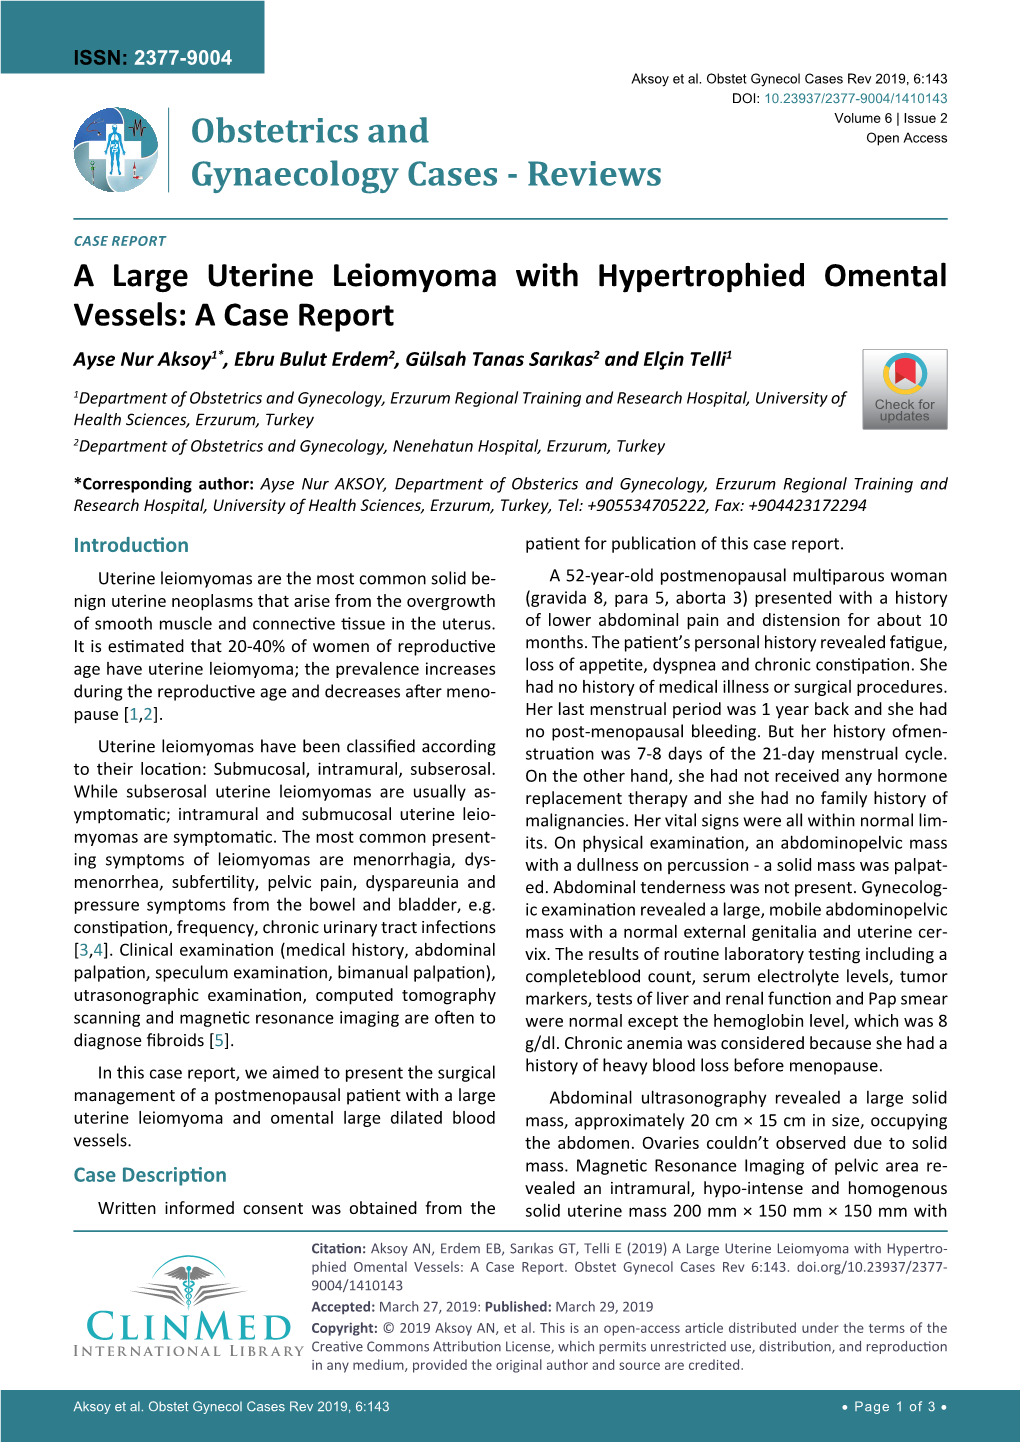 A Large Uterine Leiomyoma with Hypertrophied Omental Vessels: a Case Report Ayse Nur Aksoy1*, Ebru Bulut Erdem2, Gülsah Tanas Sarıkas2 and Elçin Telli1